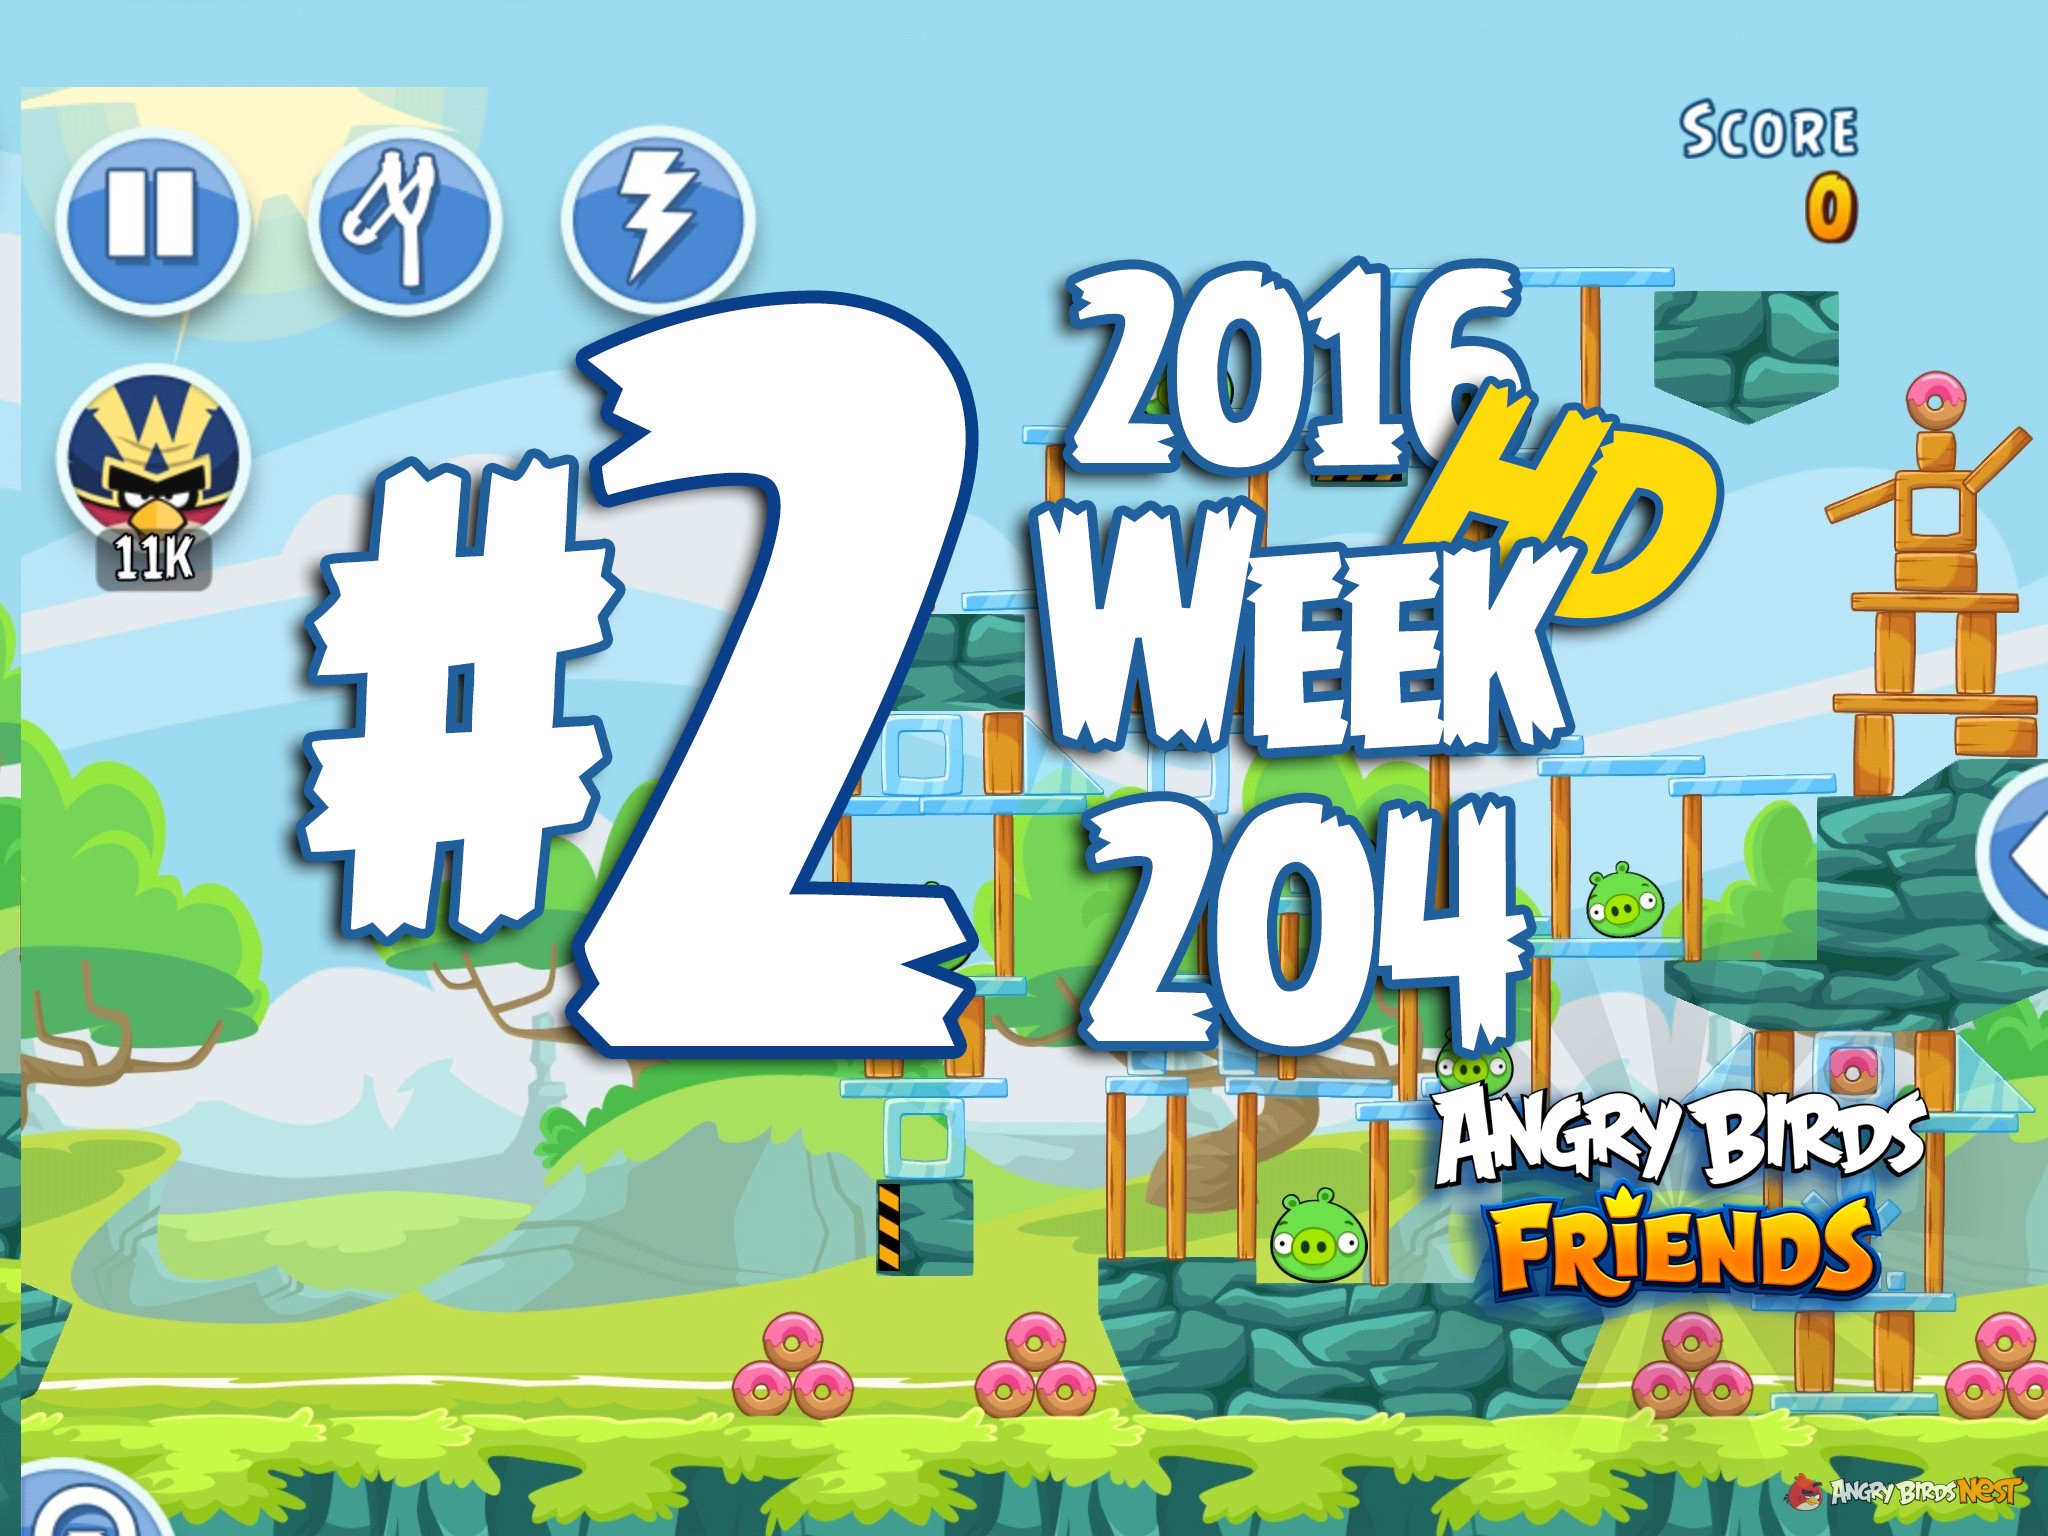 Angry Birds Friends Tournament Level 2 Week 204 Walkthrough | April 7th 2016